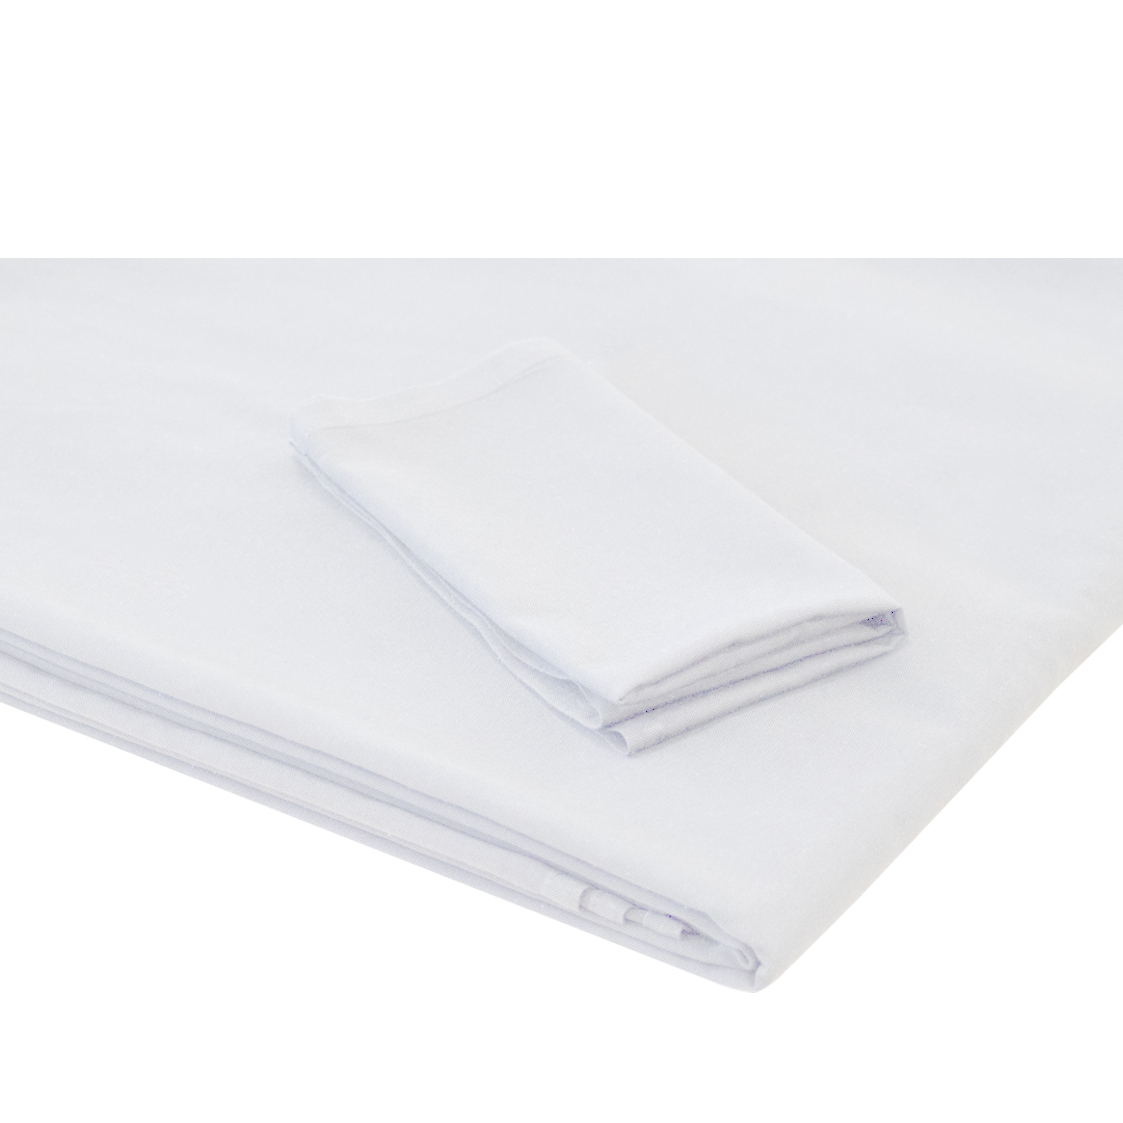 TABLECLOTH White Linen cm 300x300 